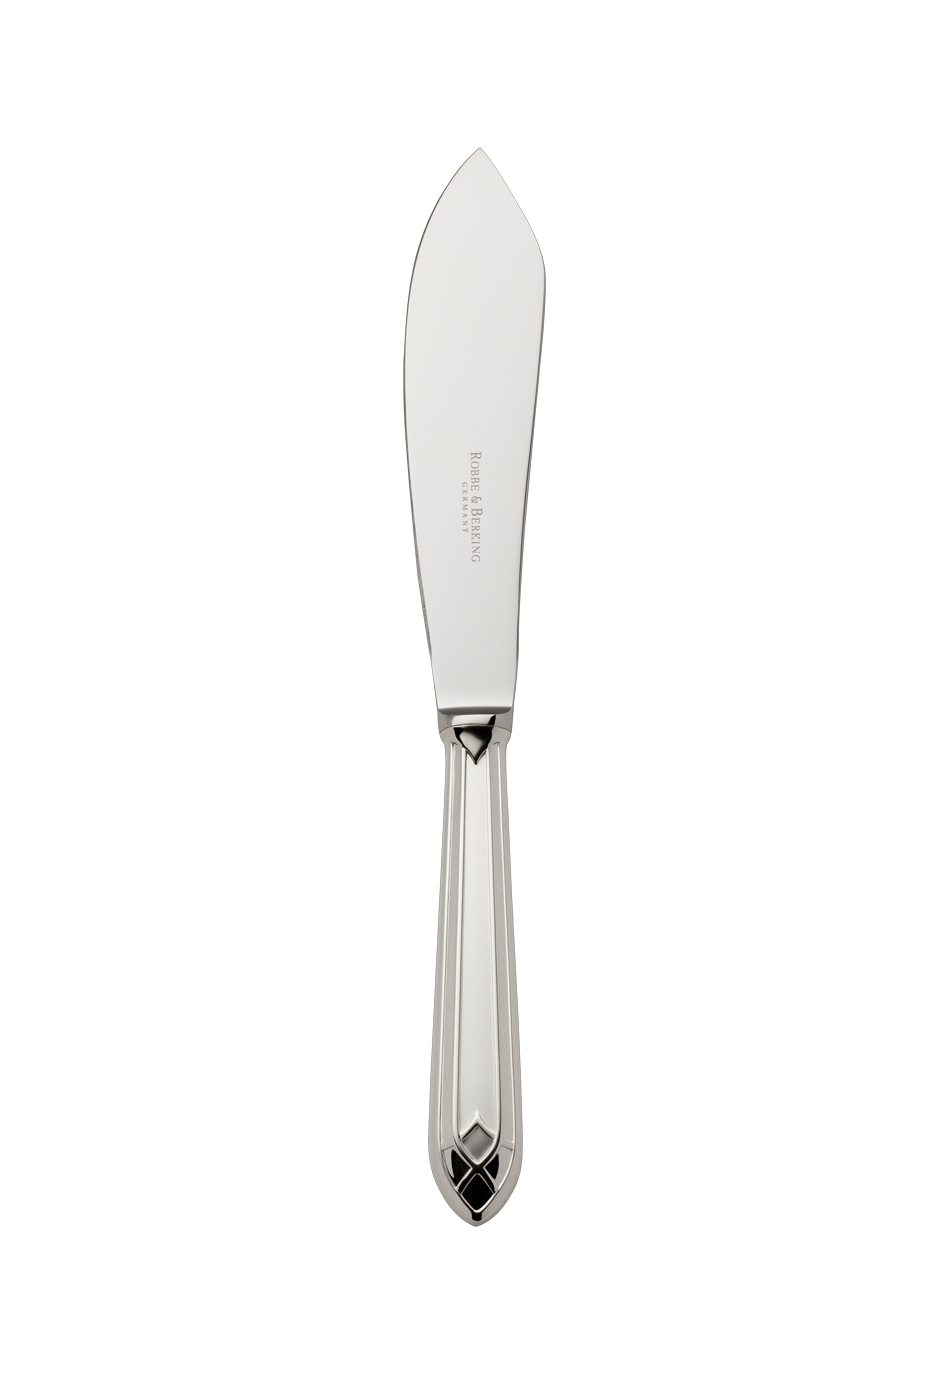 Arcade Tart Knife (150g massive silverplated)